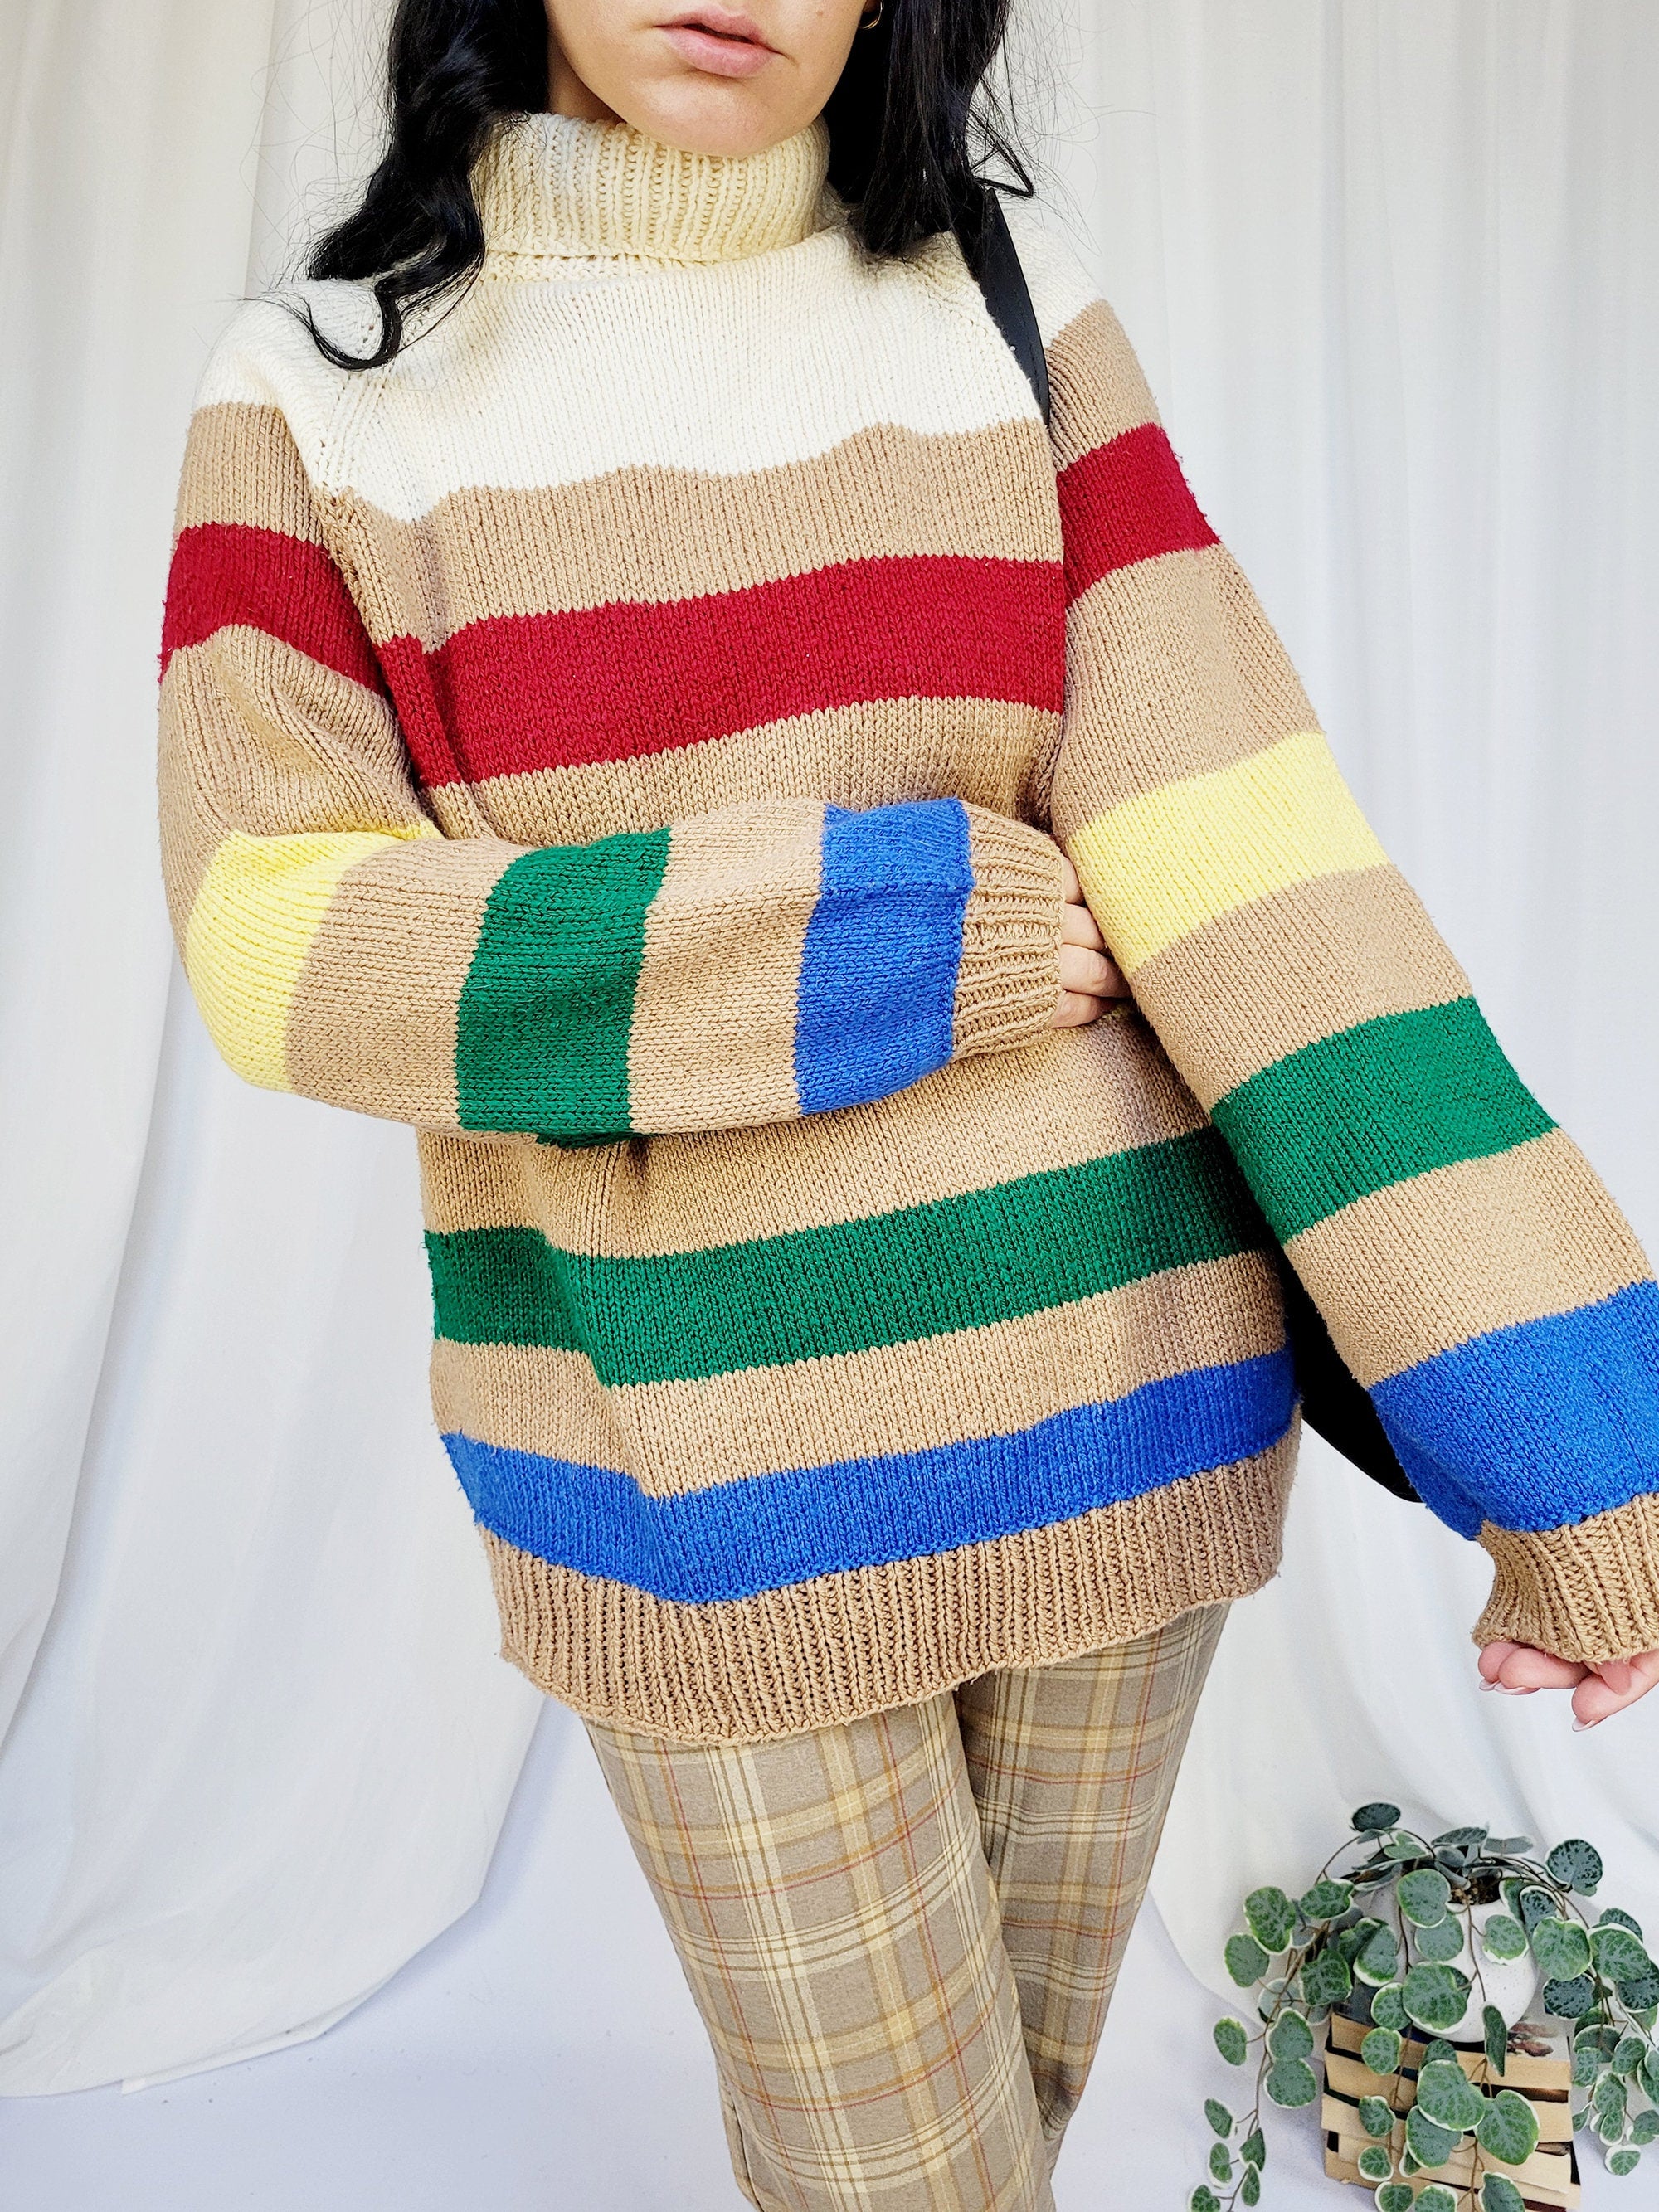 Retro 90s handknit striped colorful minimalist sweater top